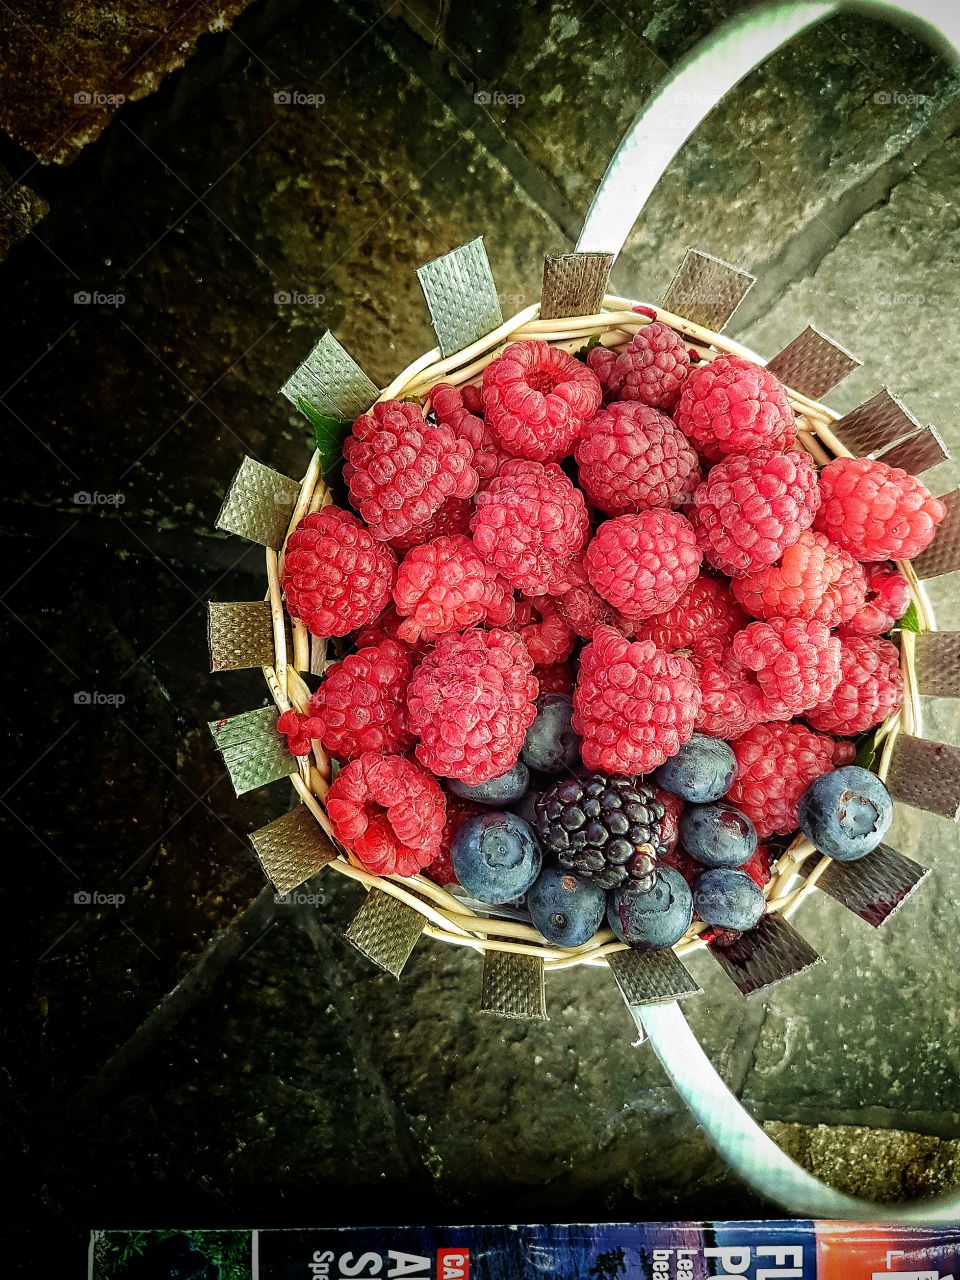 Basket full of berries